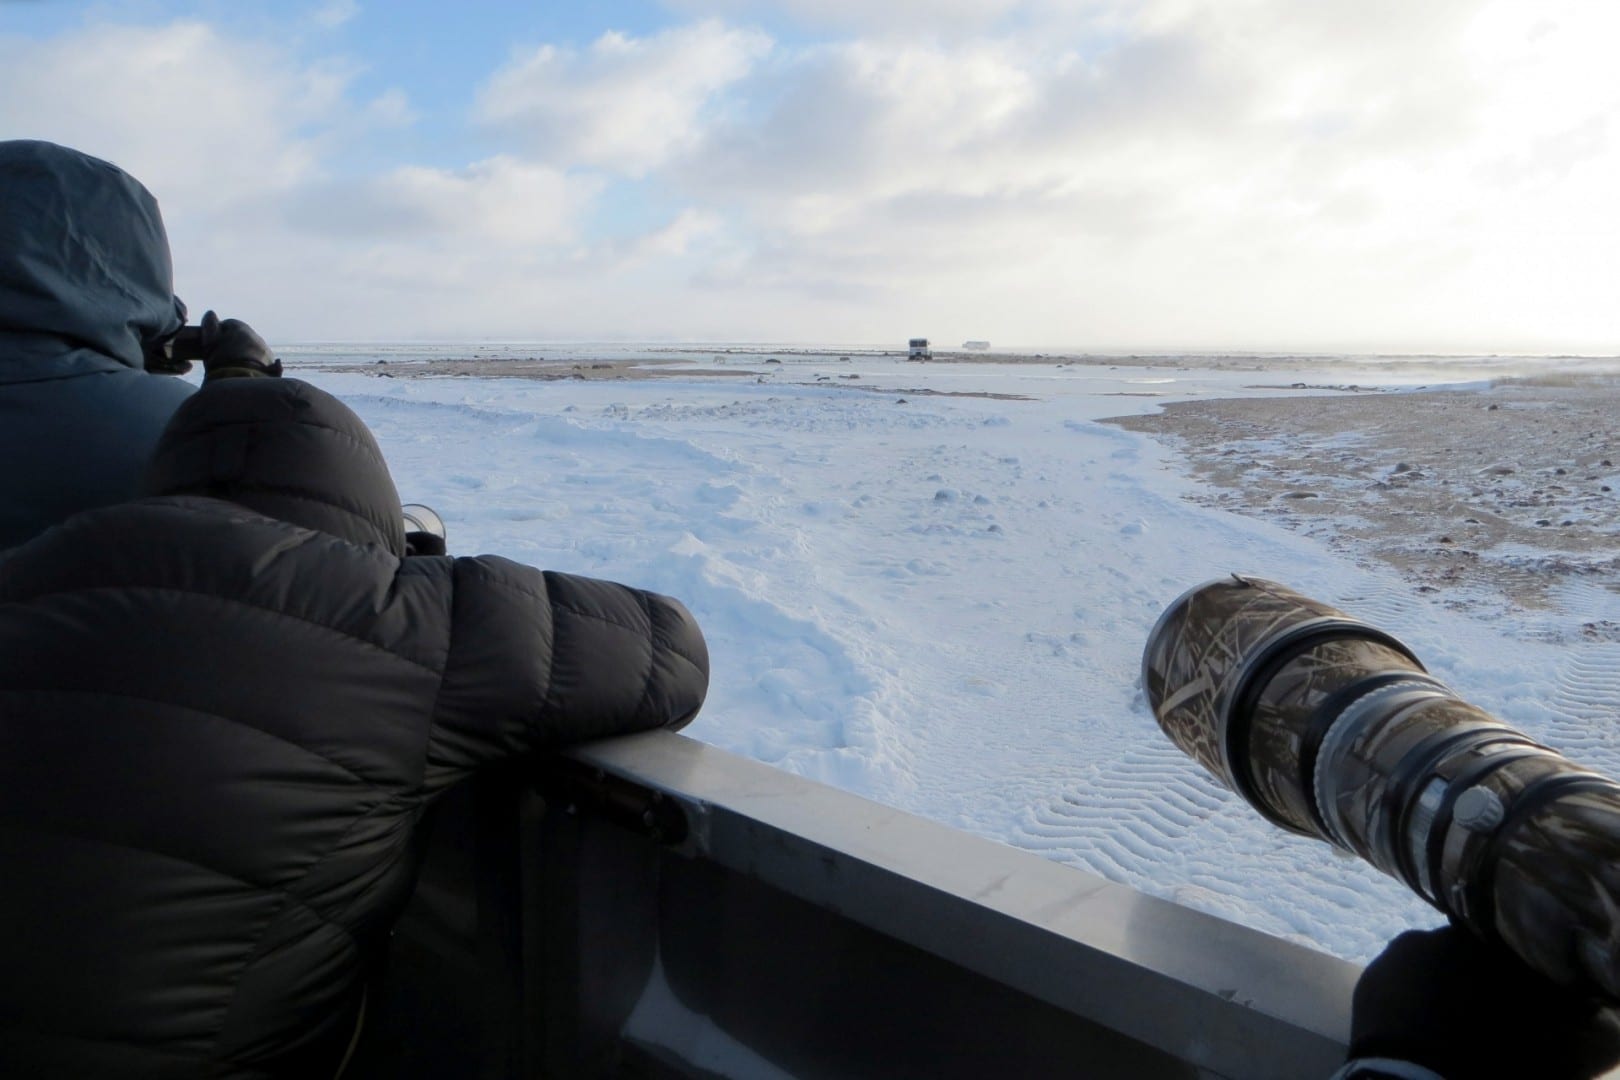 Preparen sus cámaras, fotografía de osos polares desde la parte trasera de un Tundra Buggy Churchill Canadá